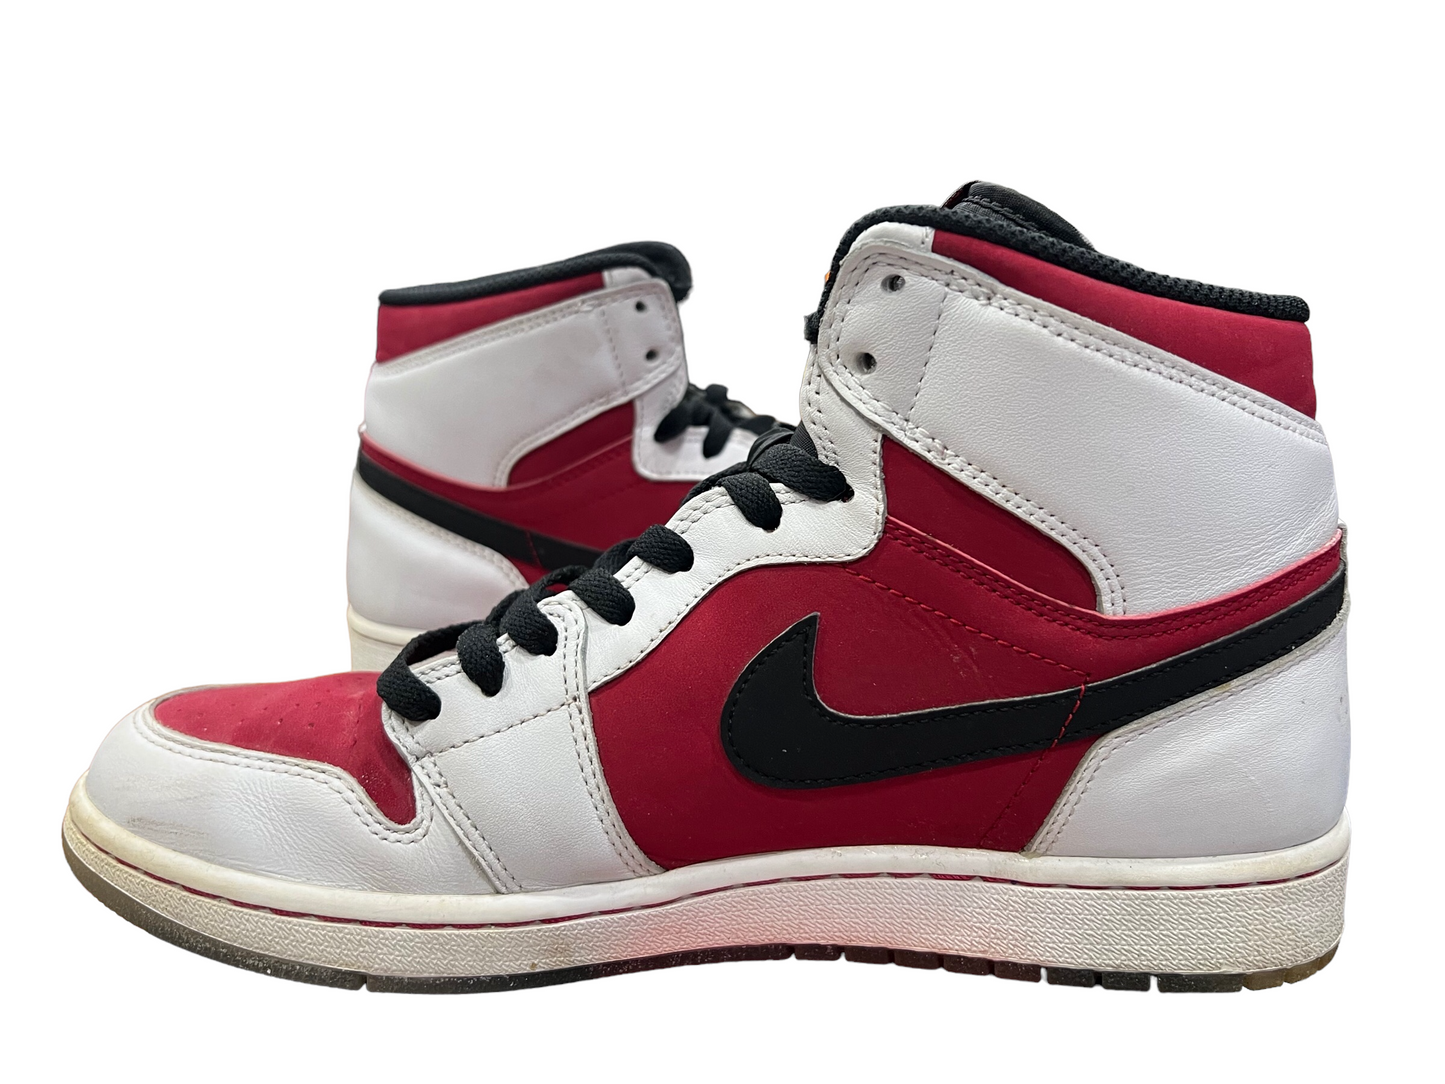 Air Jordan 1 "Carmine" Size 10